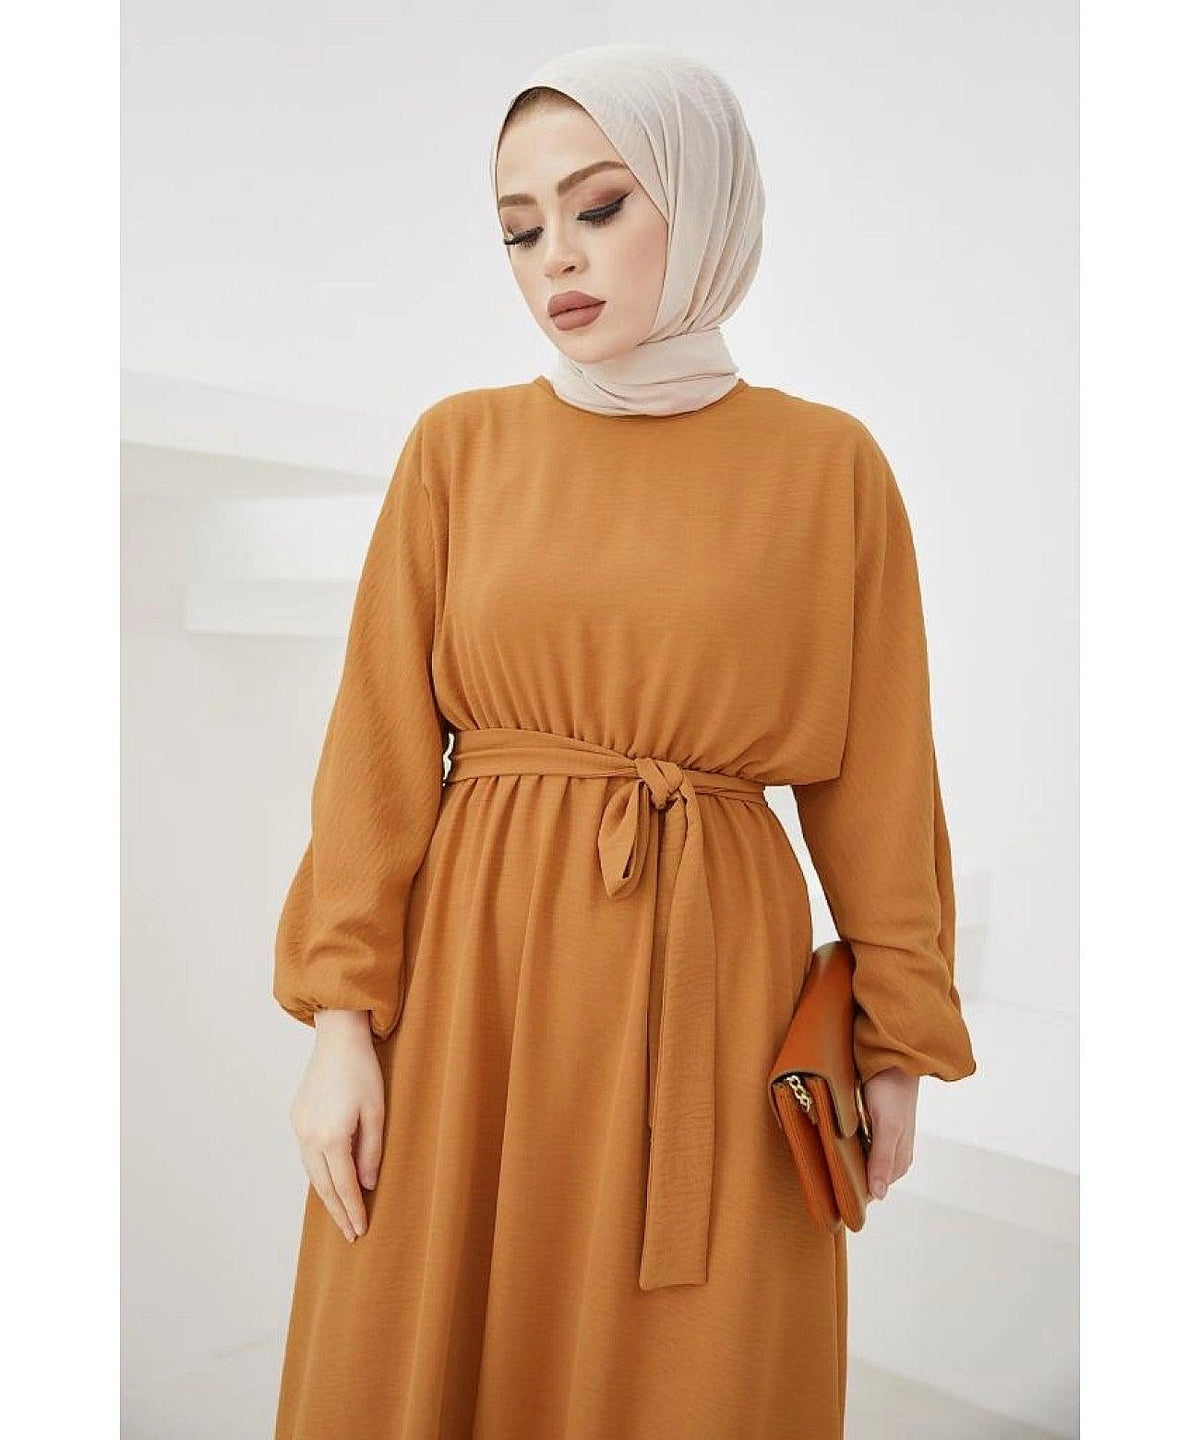 Modest Long Arab Abaya Dress - Amber